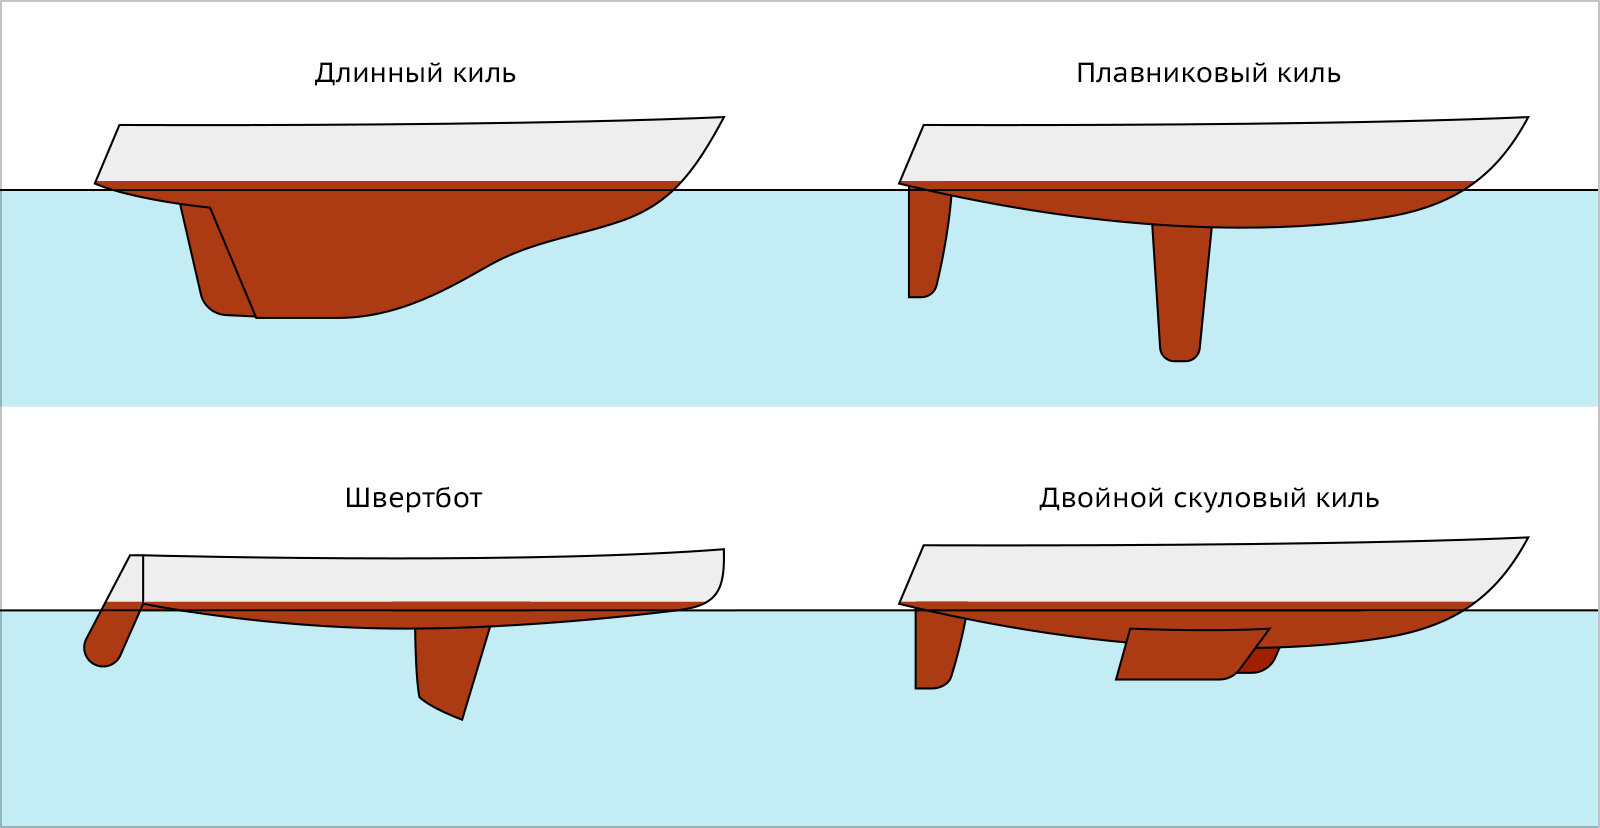 Корпуса яхт в зависимости от типа киля